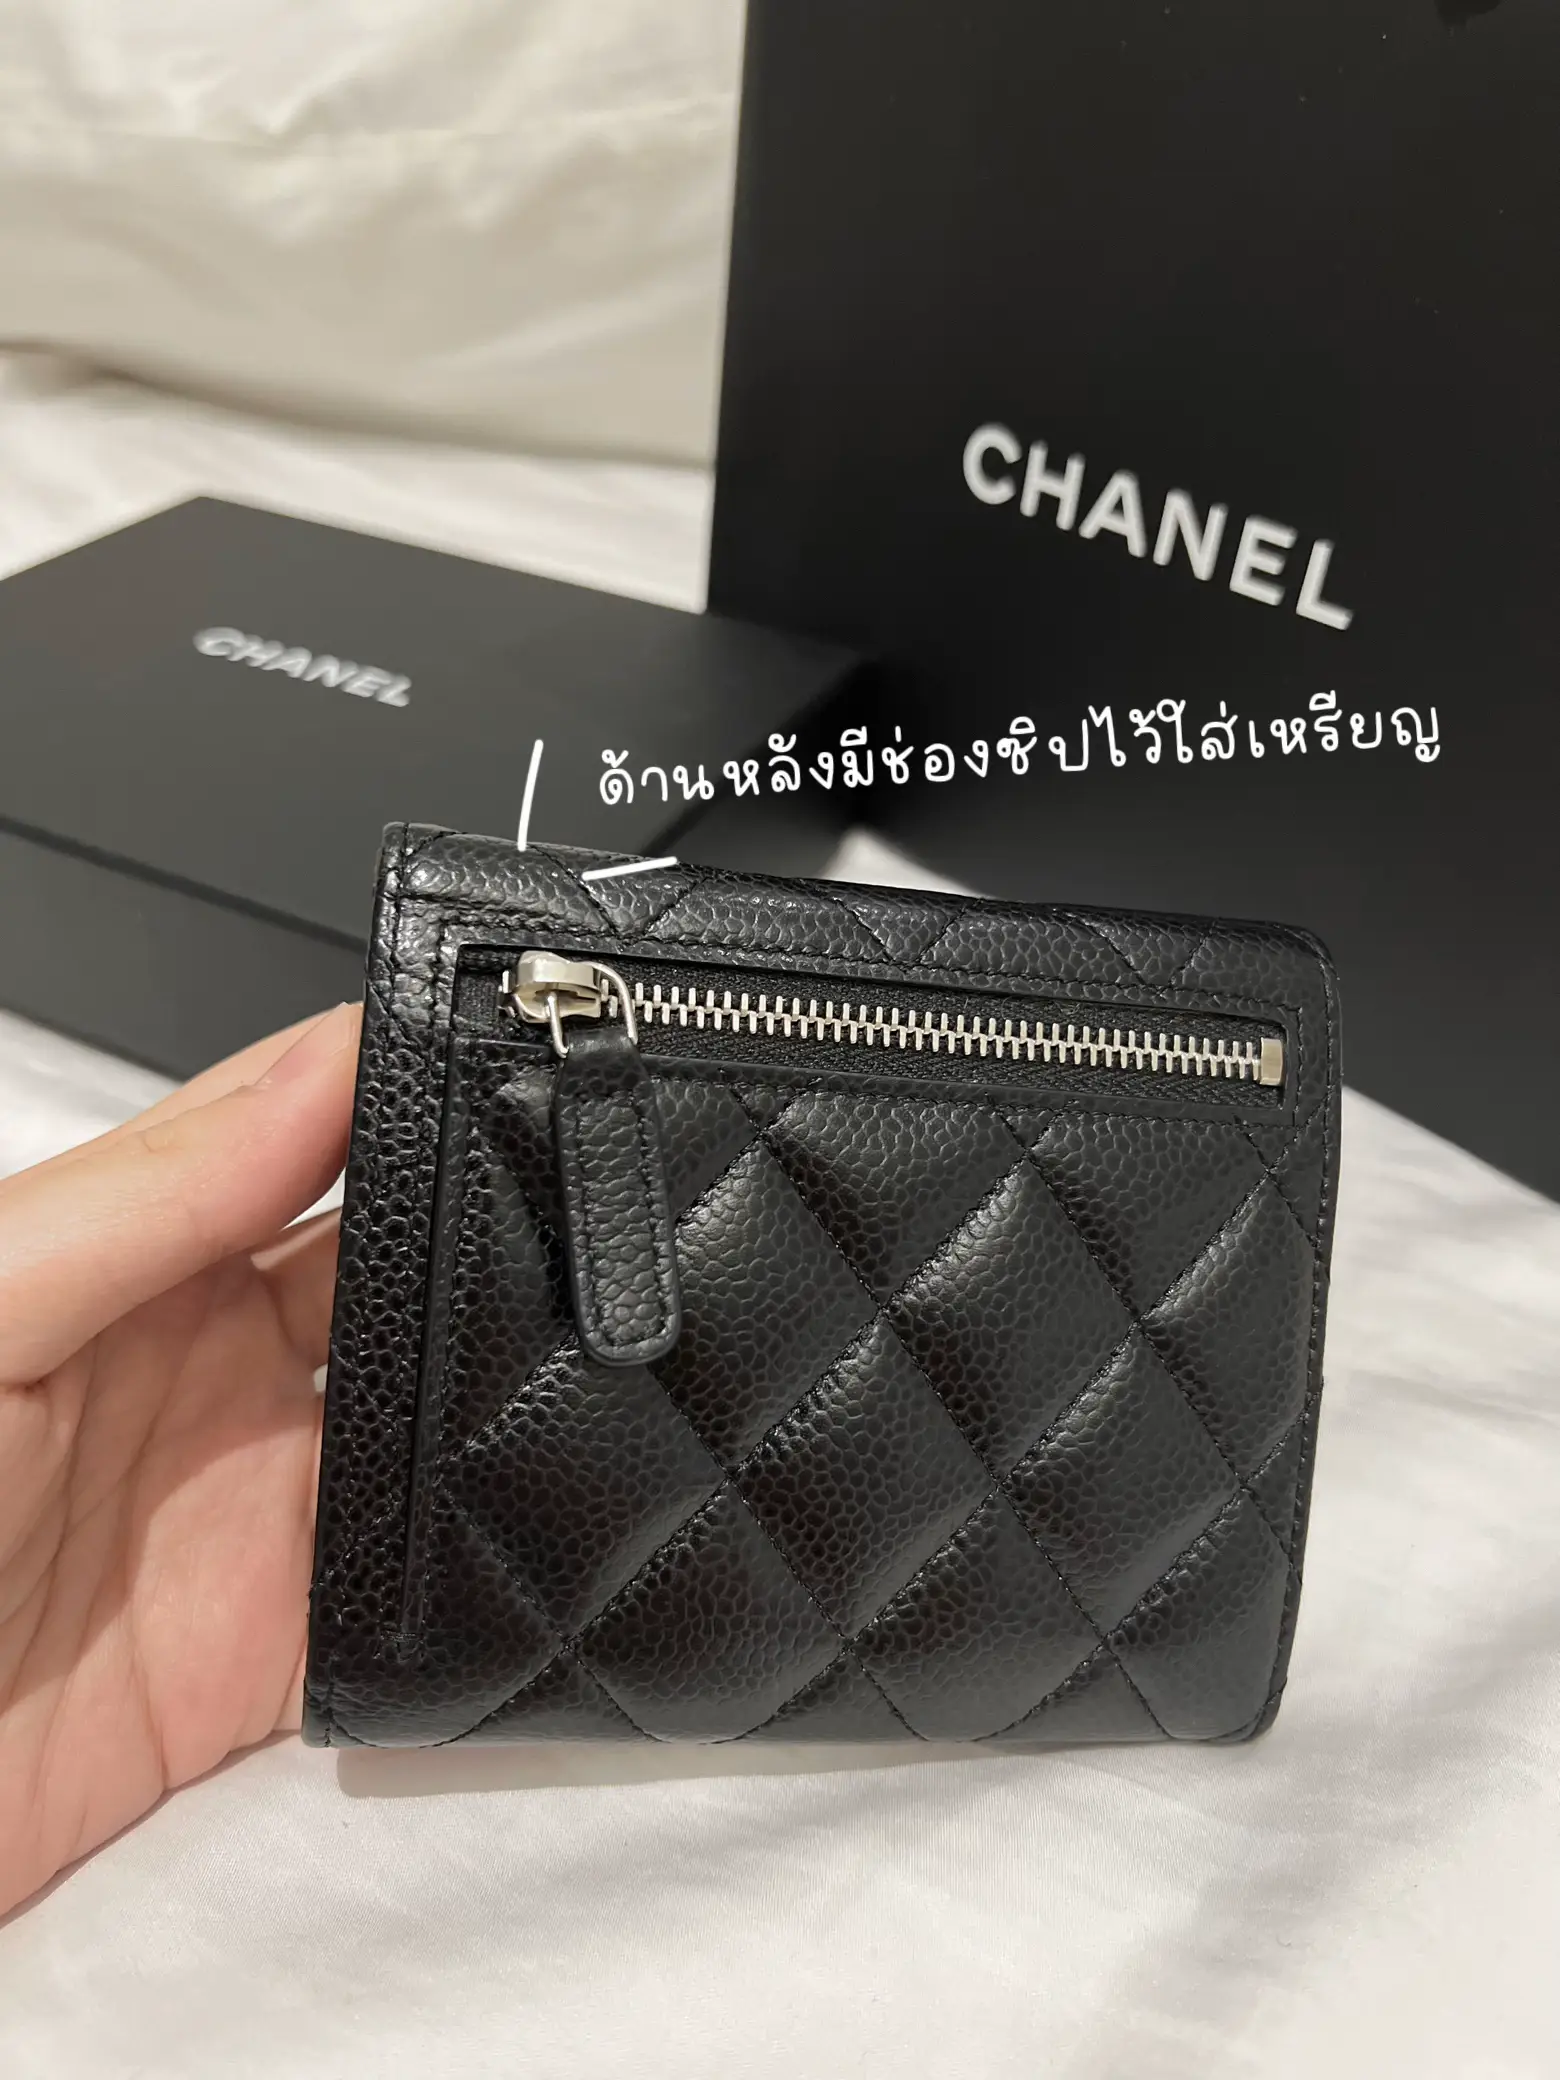 Review: Chanel card holder – Buy the goddamn bag